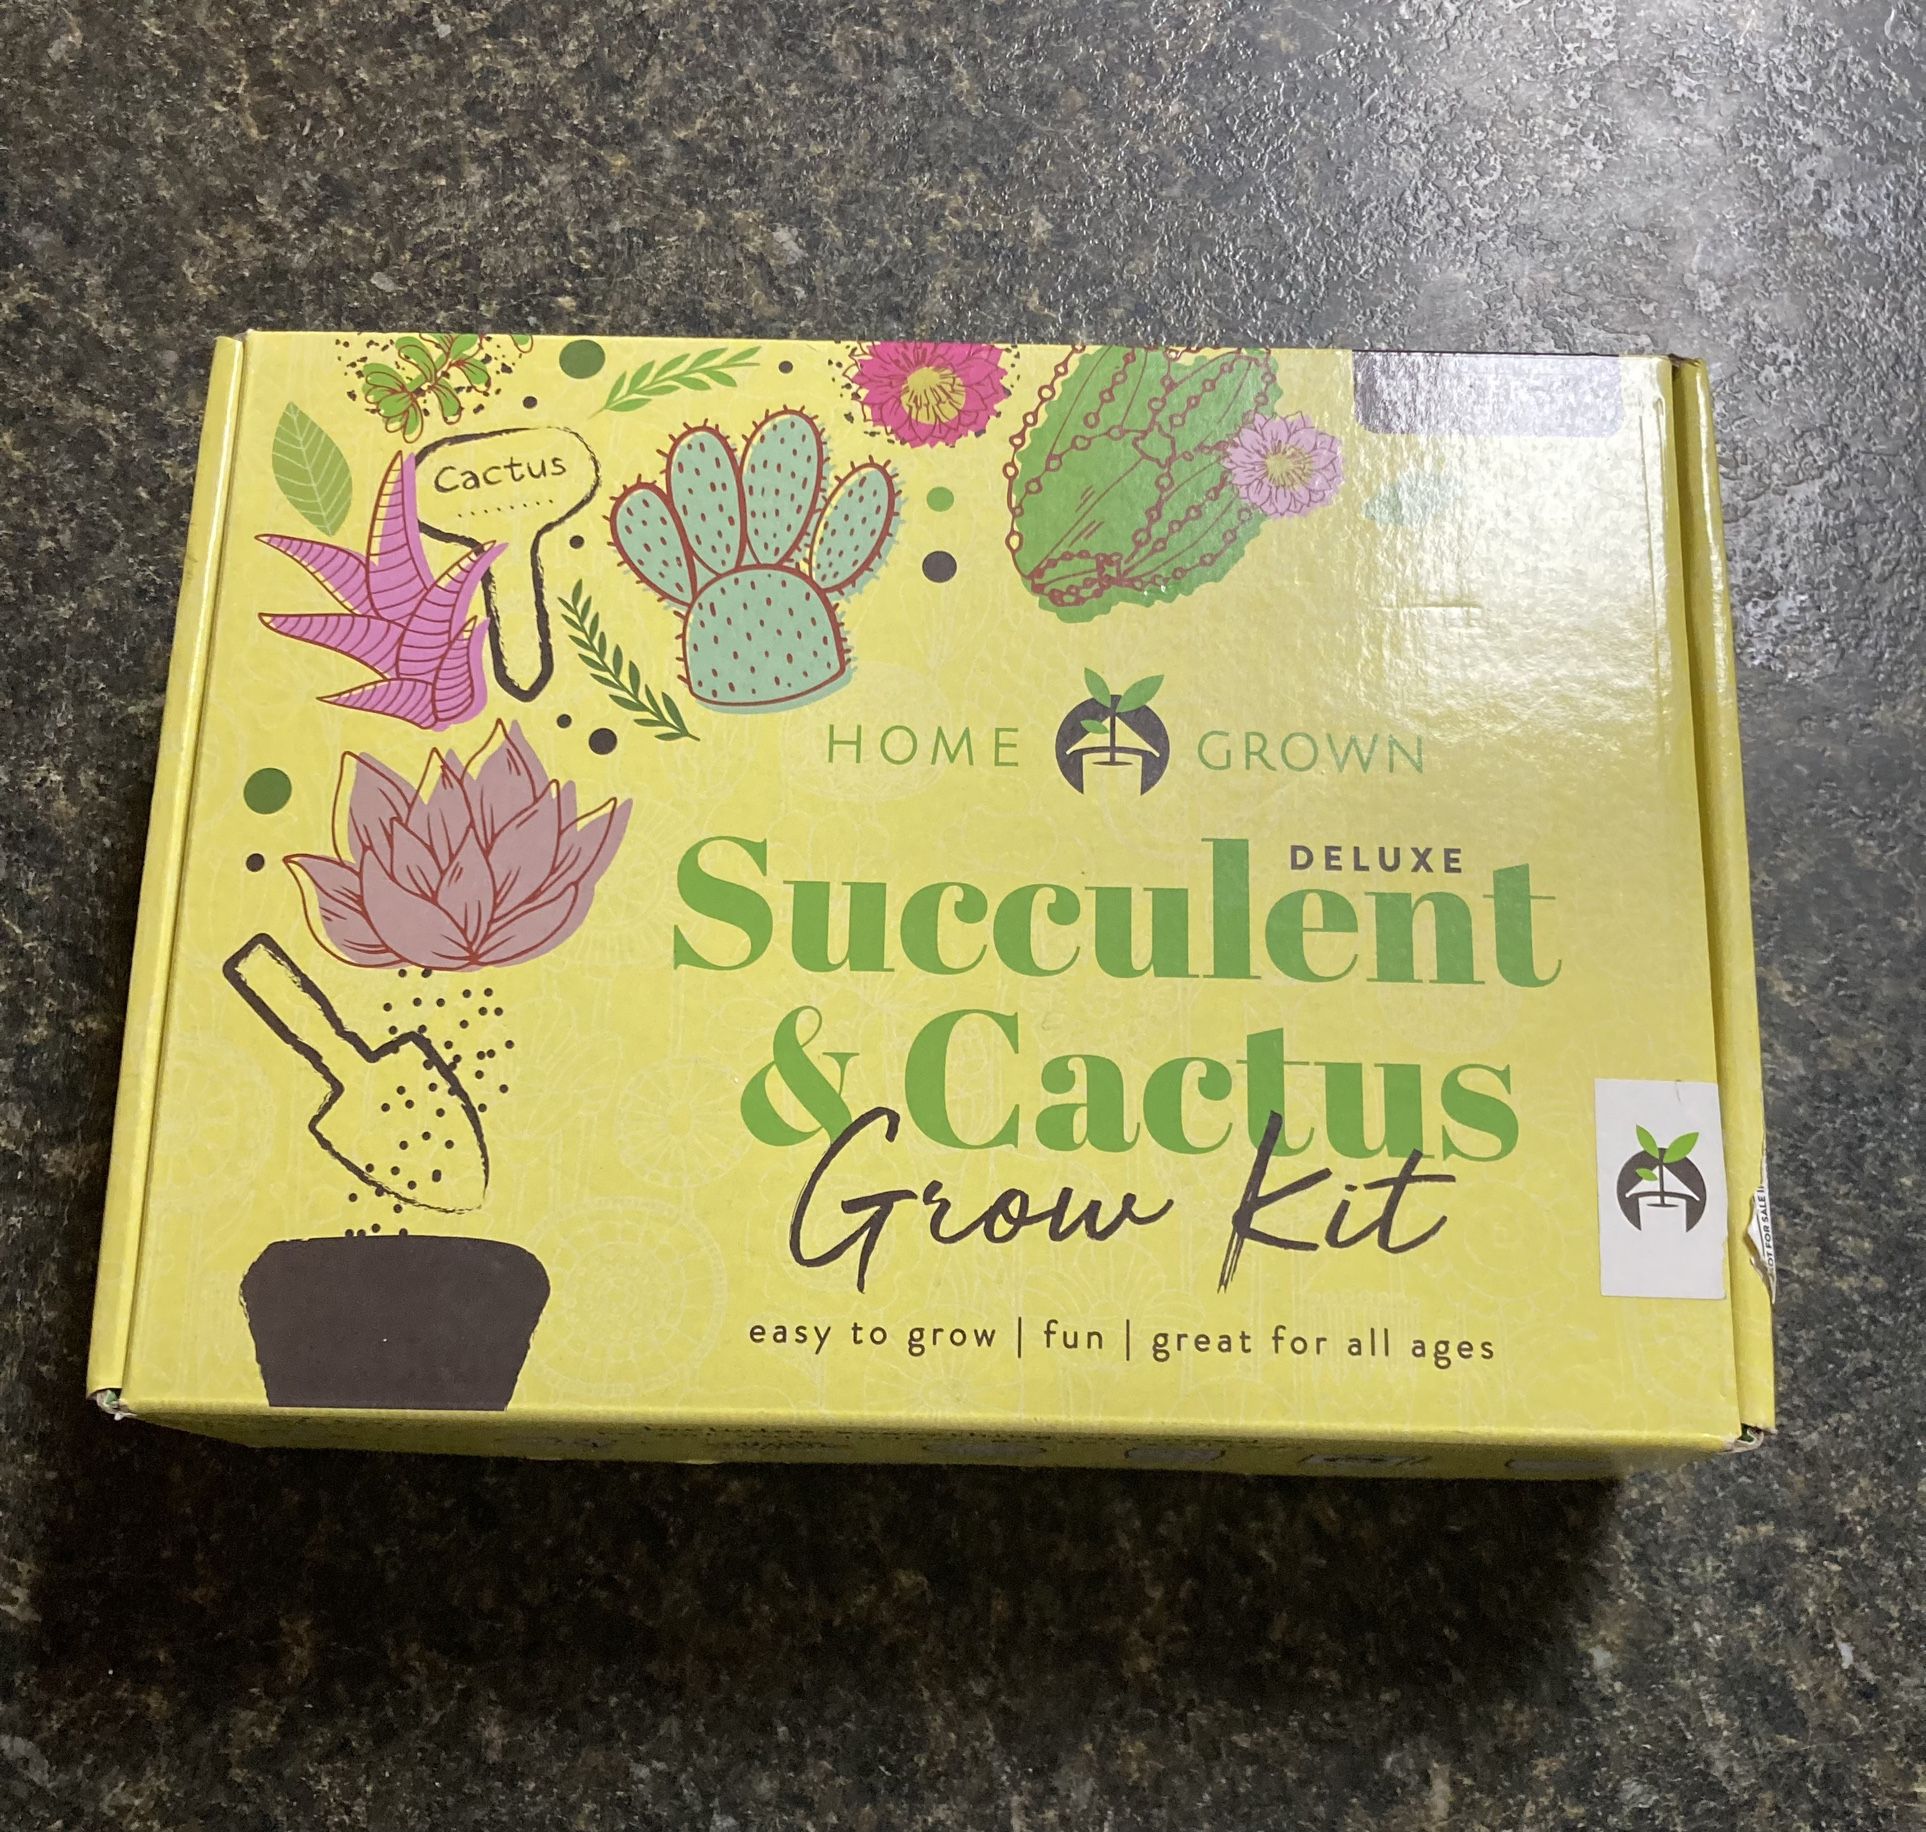 Home Grown Deluxe Succulent & Cactus Grow kit